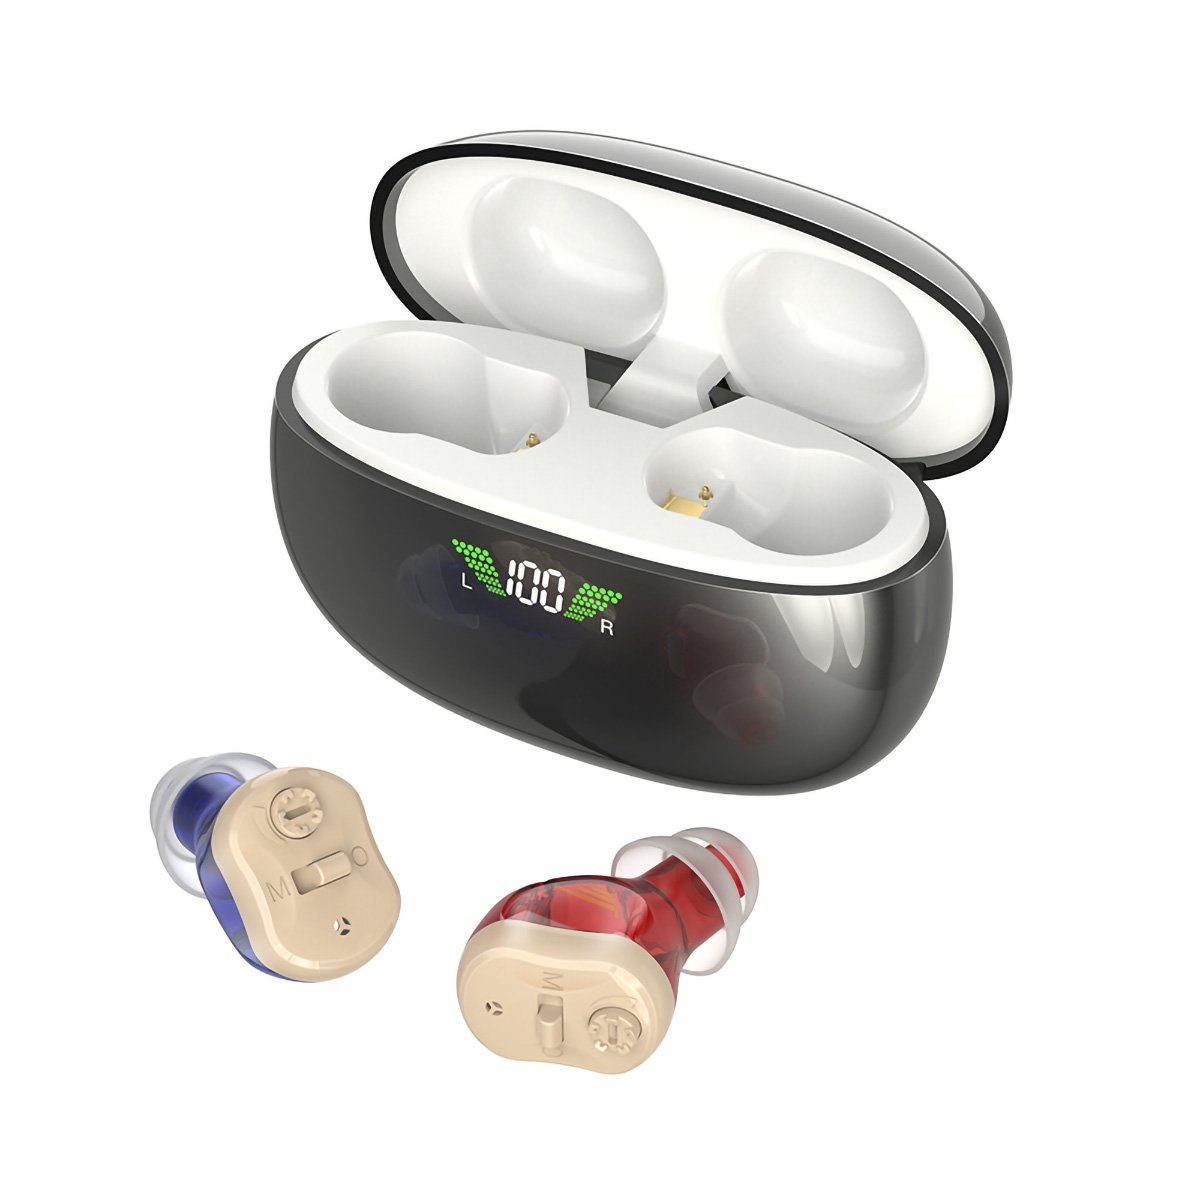 yozhiqu Im-Ohr-Hörgerät Wiederaufladbare In-Ear-Hörgeräte, intelligente Geräuschunterdrückung, digitale Display-Soundverstärker-Hörgeräte für ältere Menschen